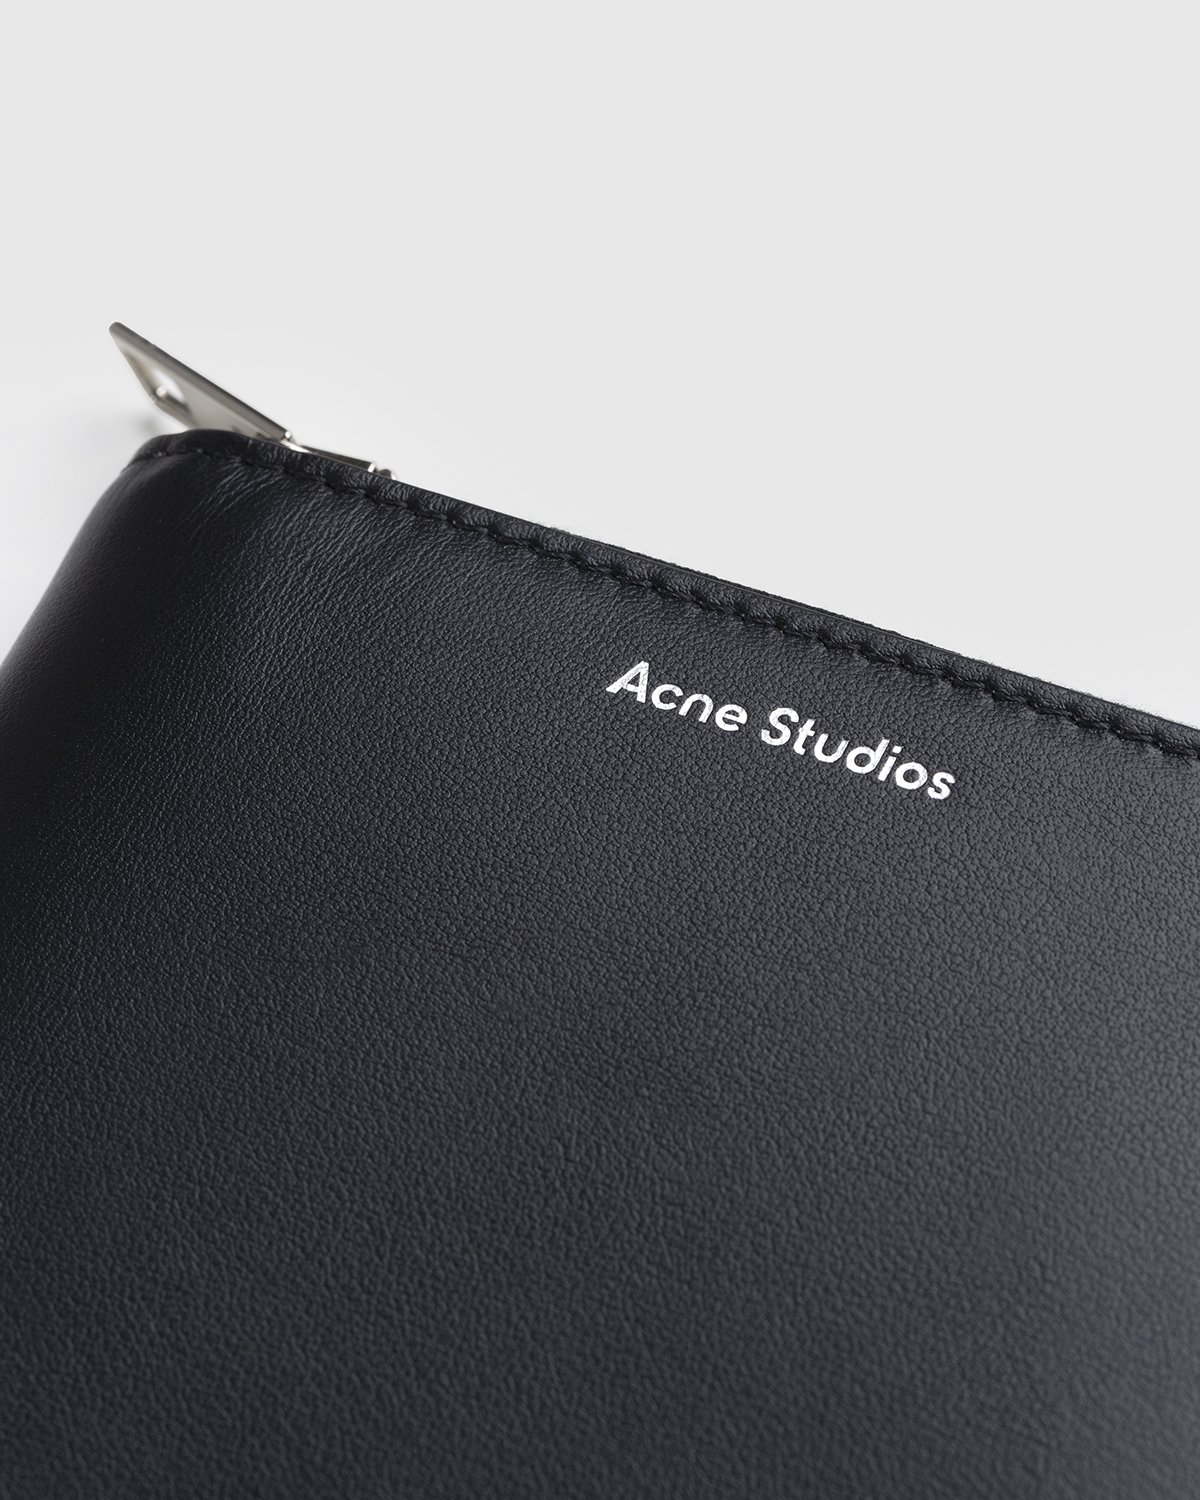 Acne Studios - Zippered Wallet Black - Accessories - Black - Image 4